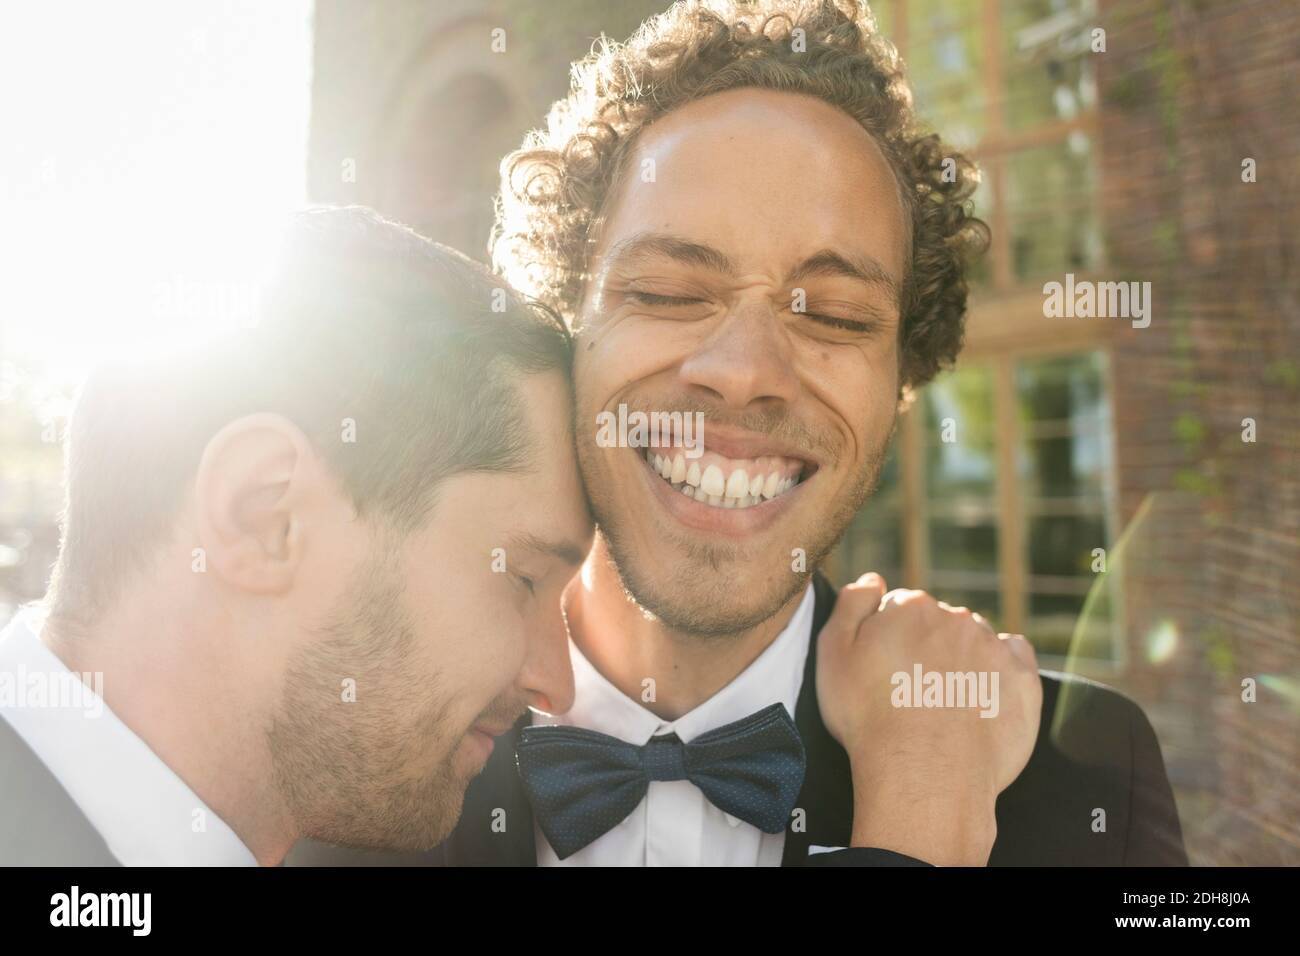 Close-up of gay man embracing cheerful newlywed partner with eyes closed Stock Photo